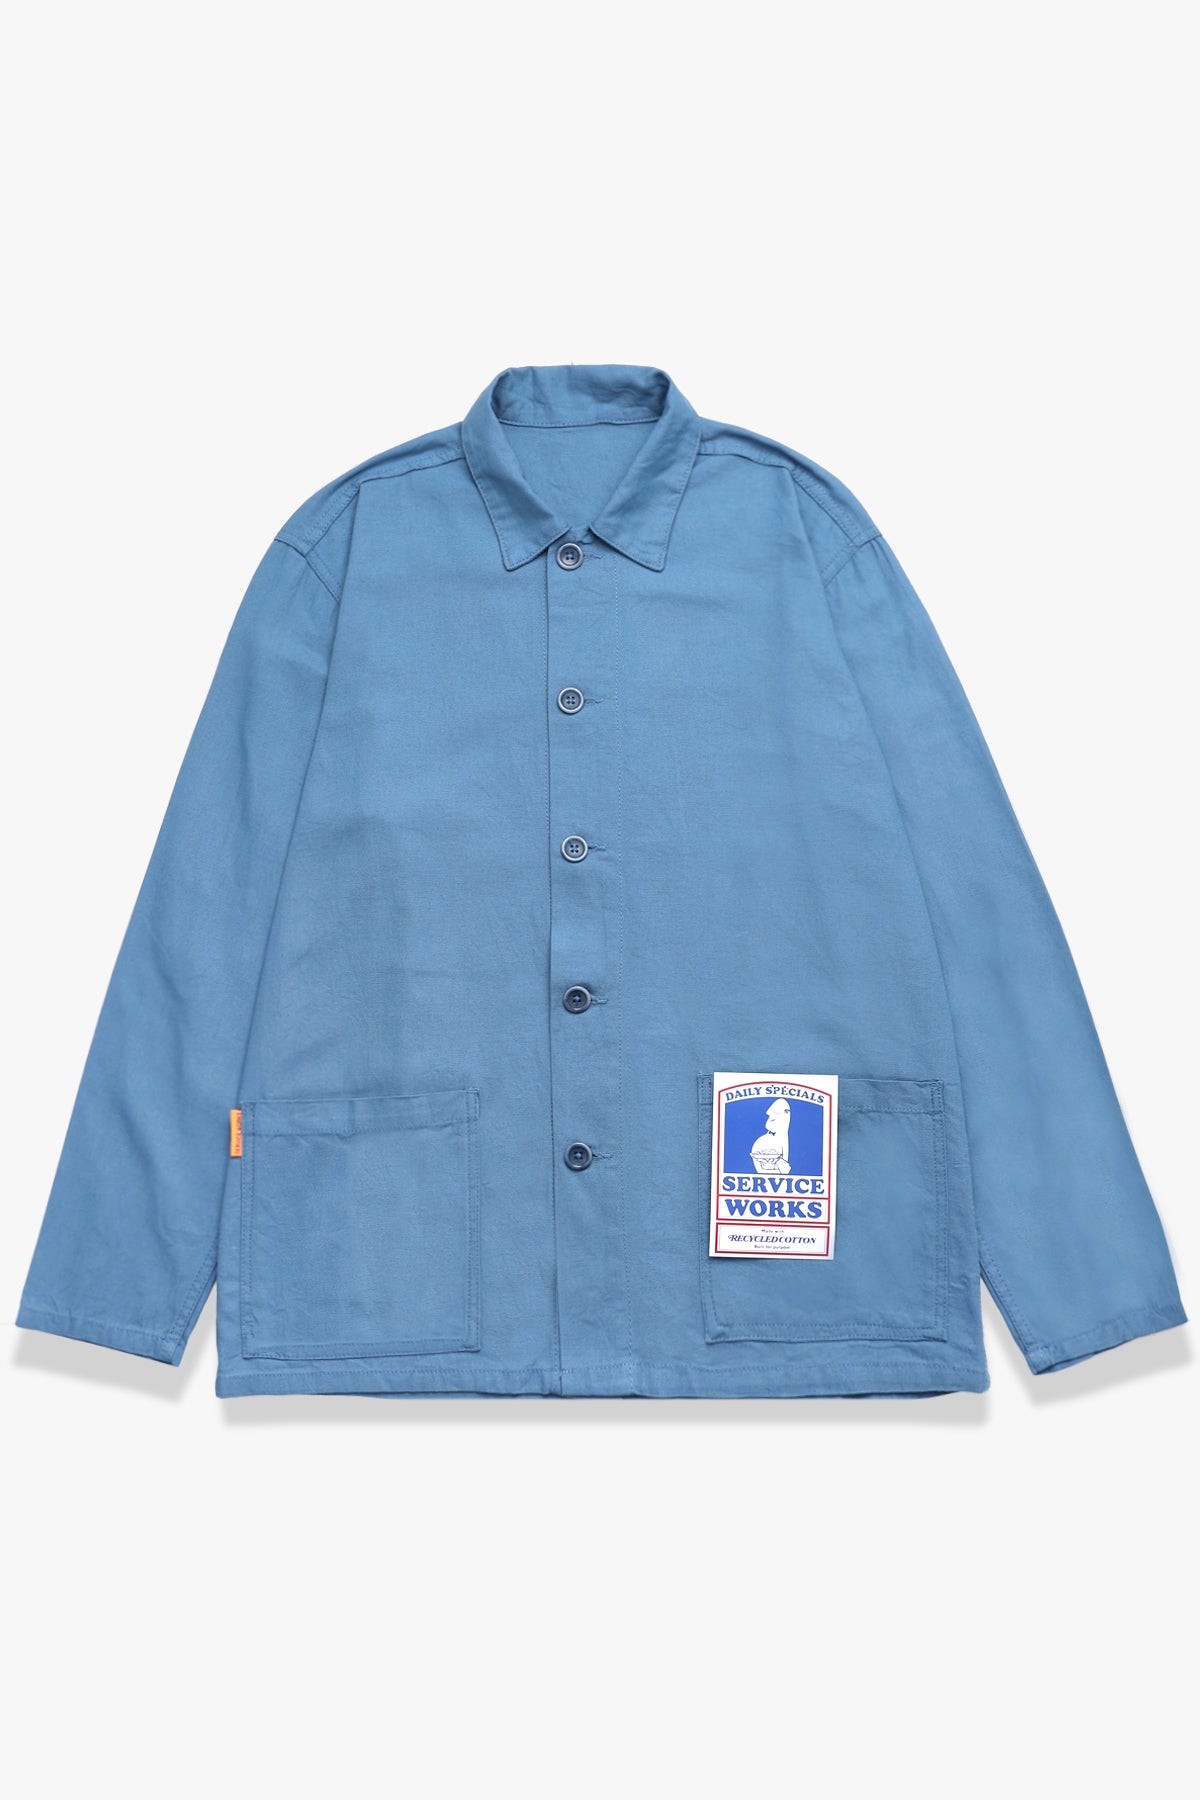 Service Works - Trade Jacket - Work Blue